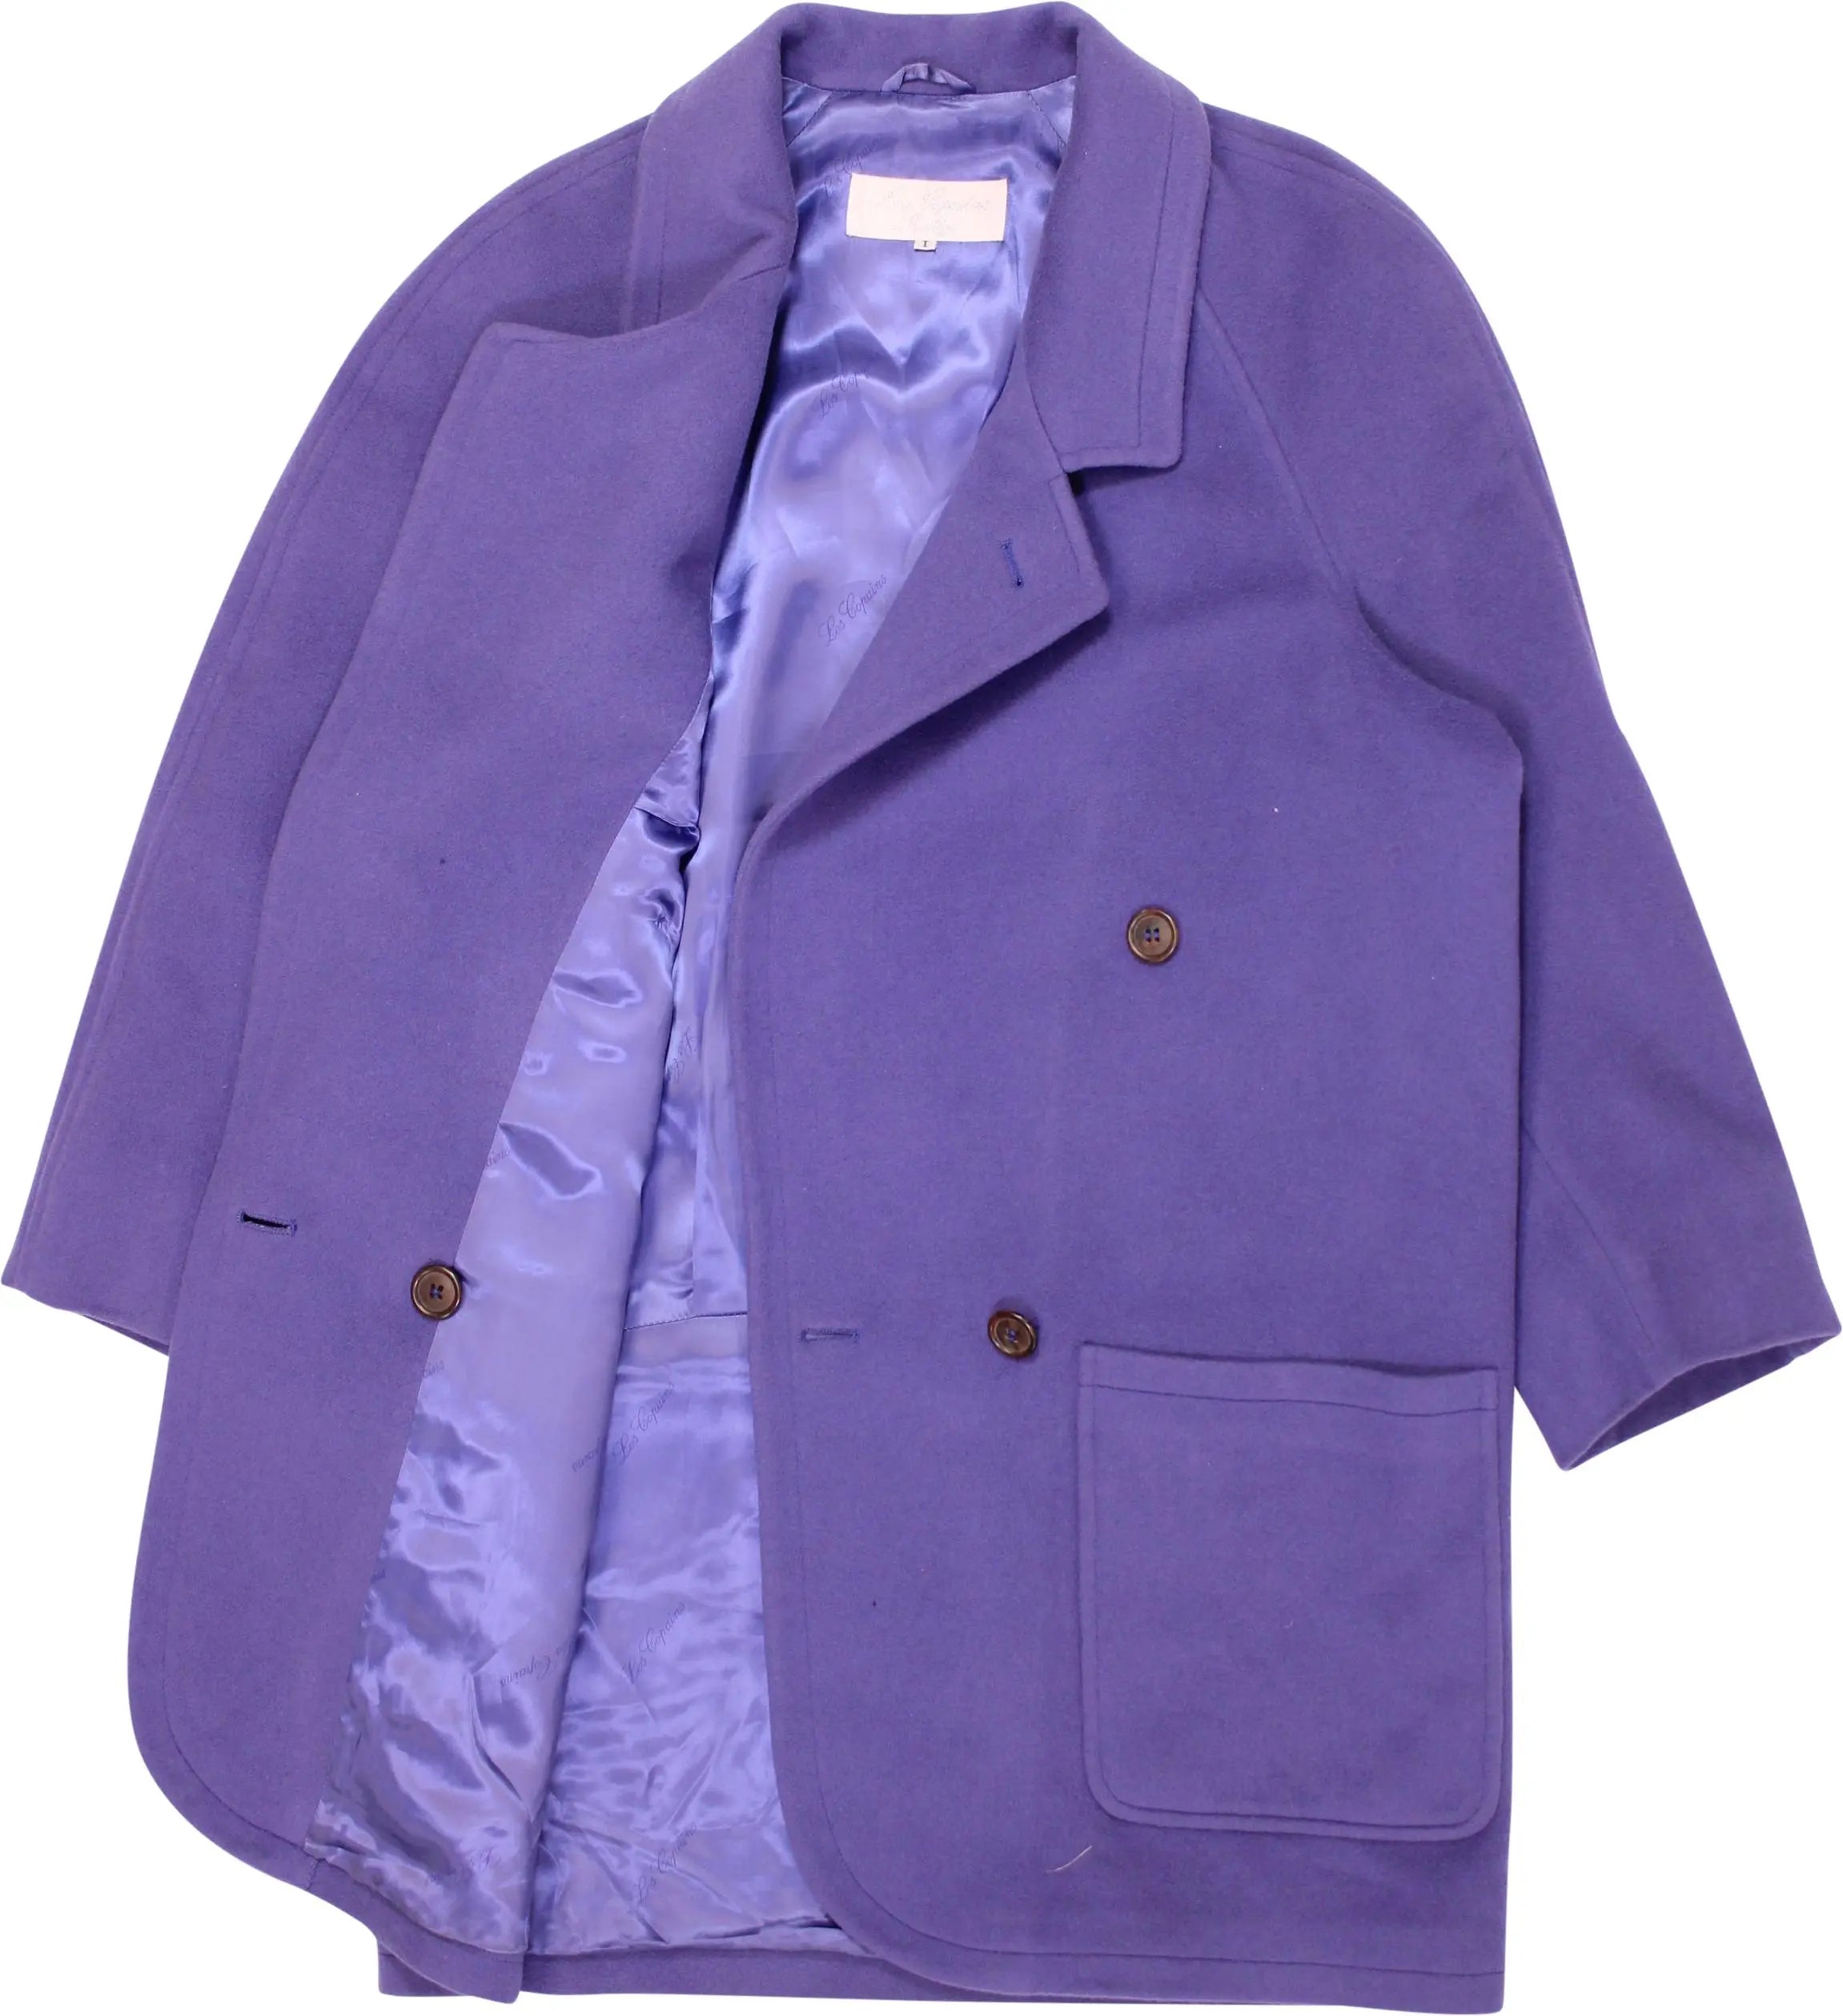 Les Copains Prestige - Purple Wool and Cashmere Coat by Les Copains Prestige- ThriftTale.com - Vintage and second handclothing